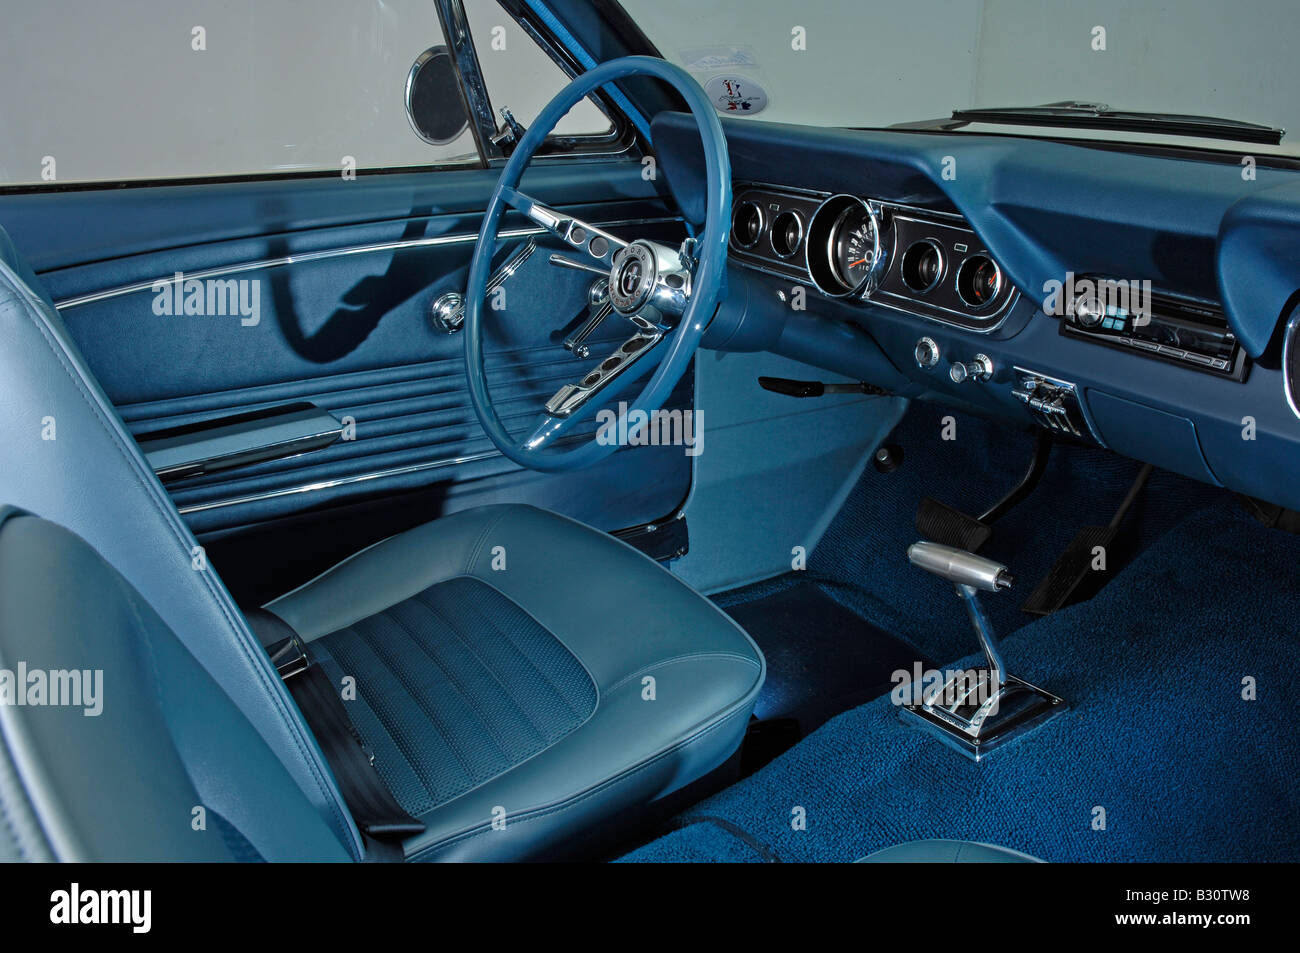 1966 Ford Mustang 289 Interieur Stockfoto Bild 19073860